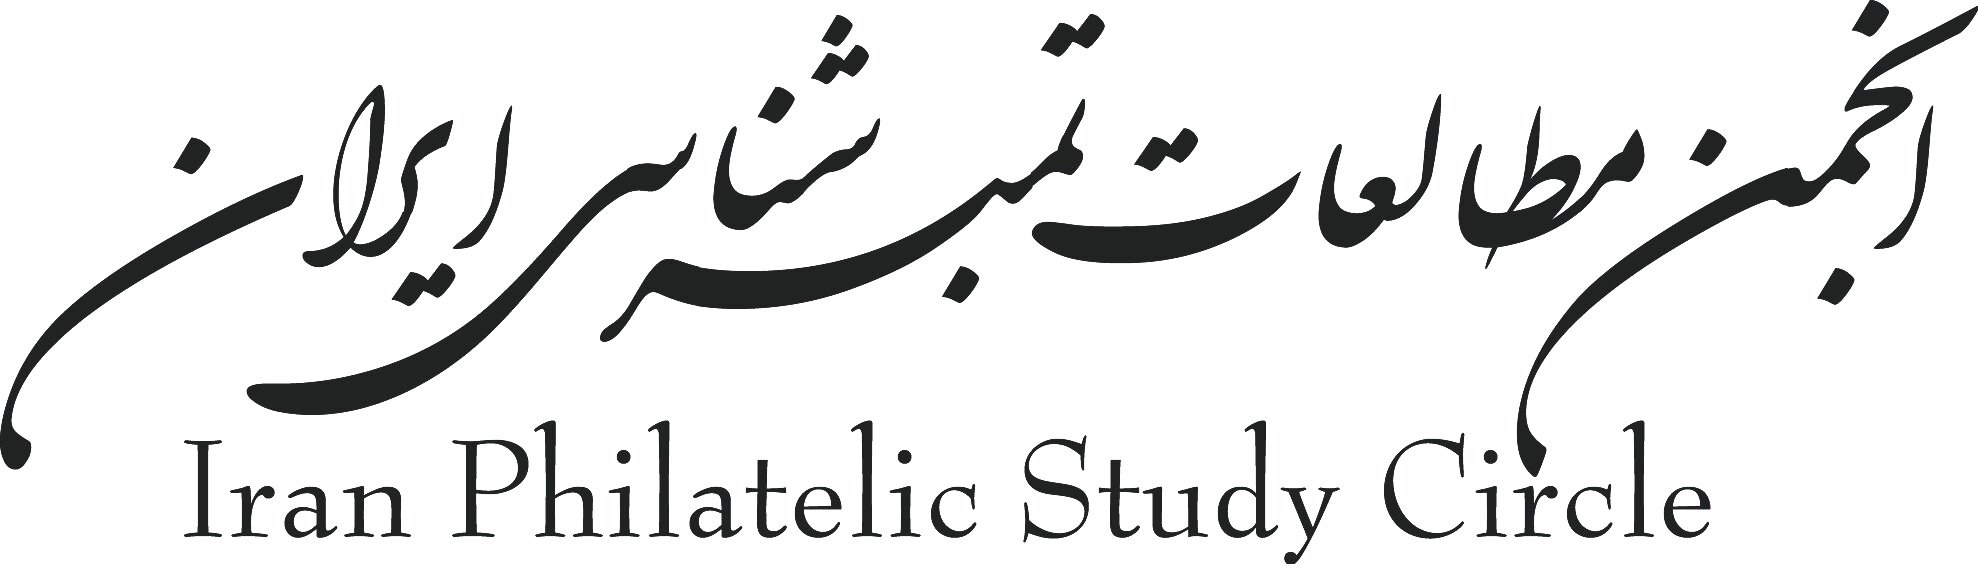 Iran Philatelic Study Circle